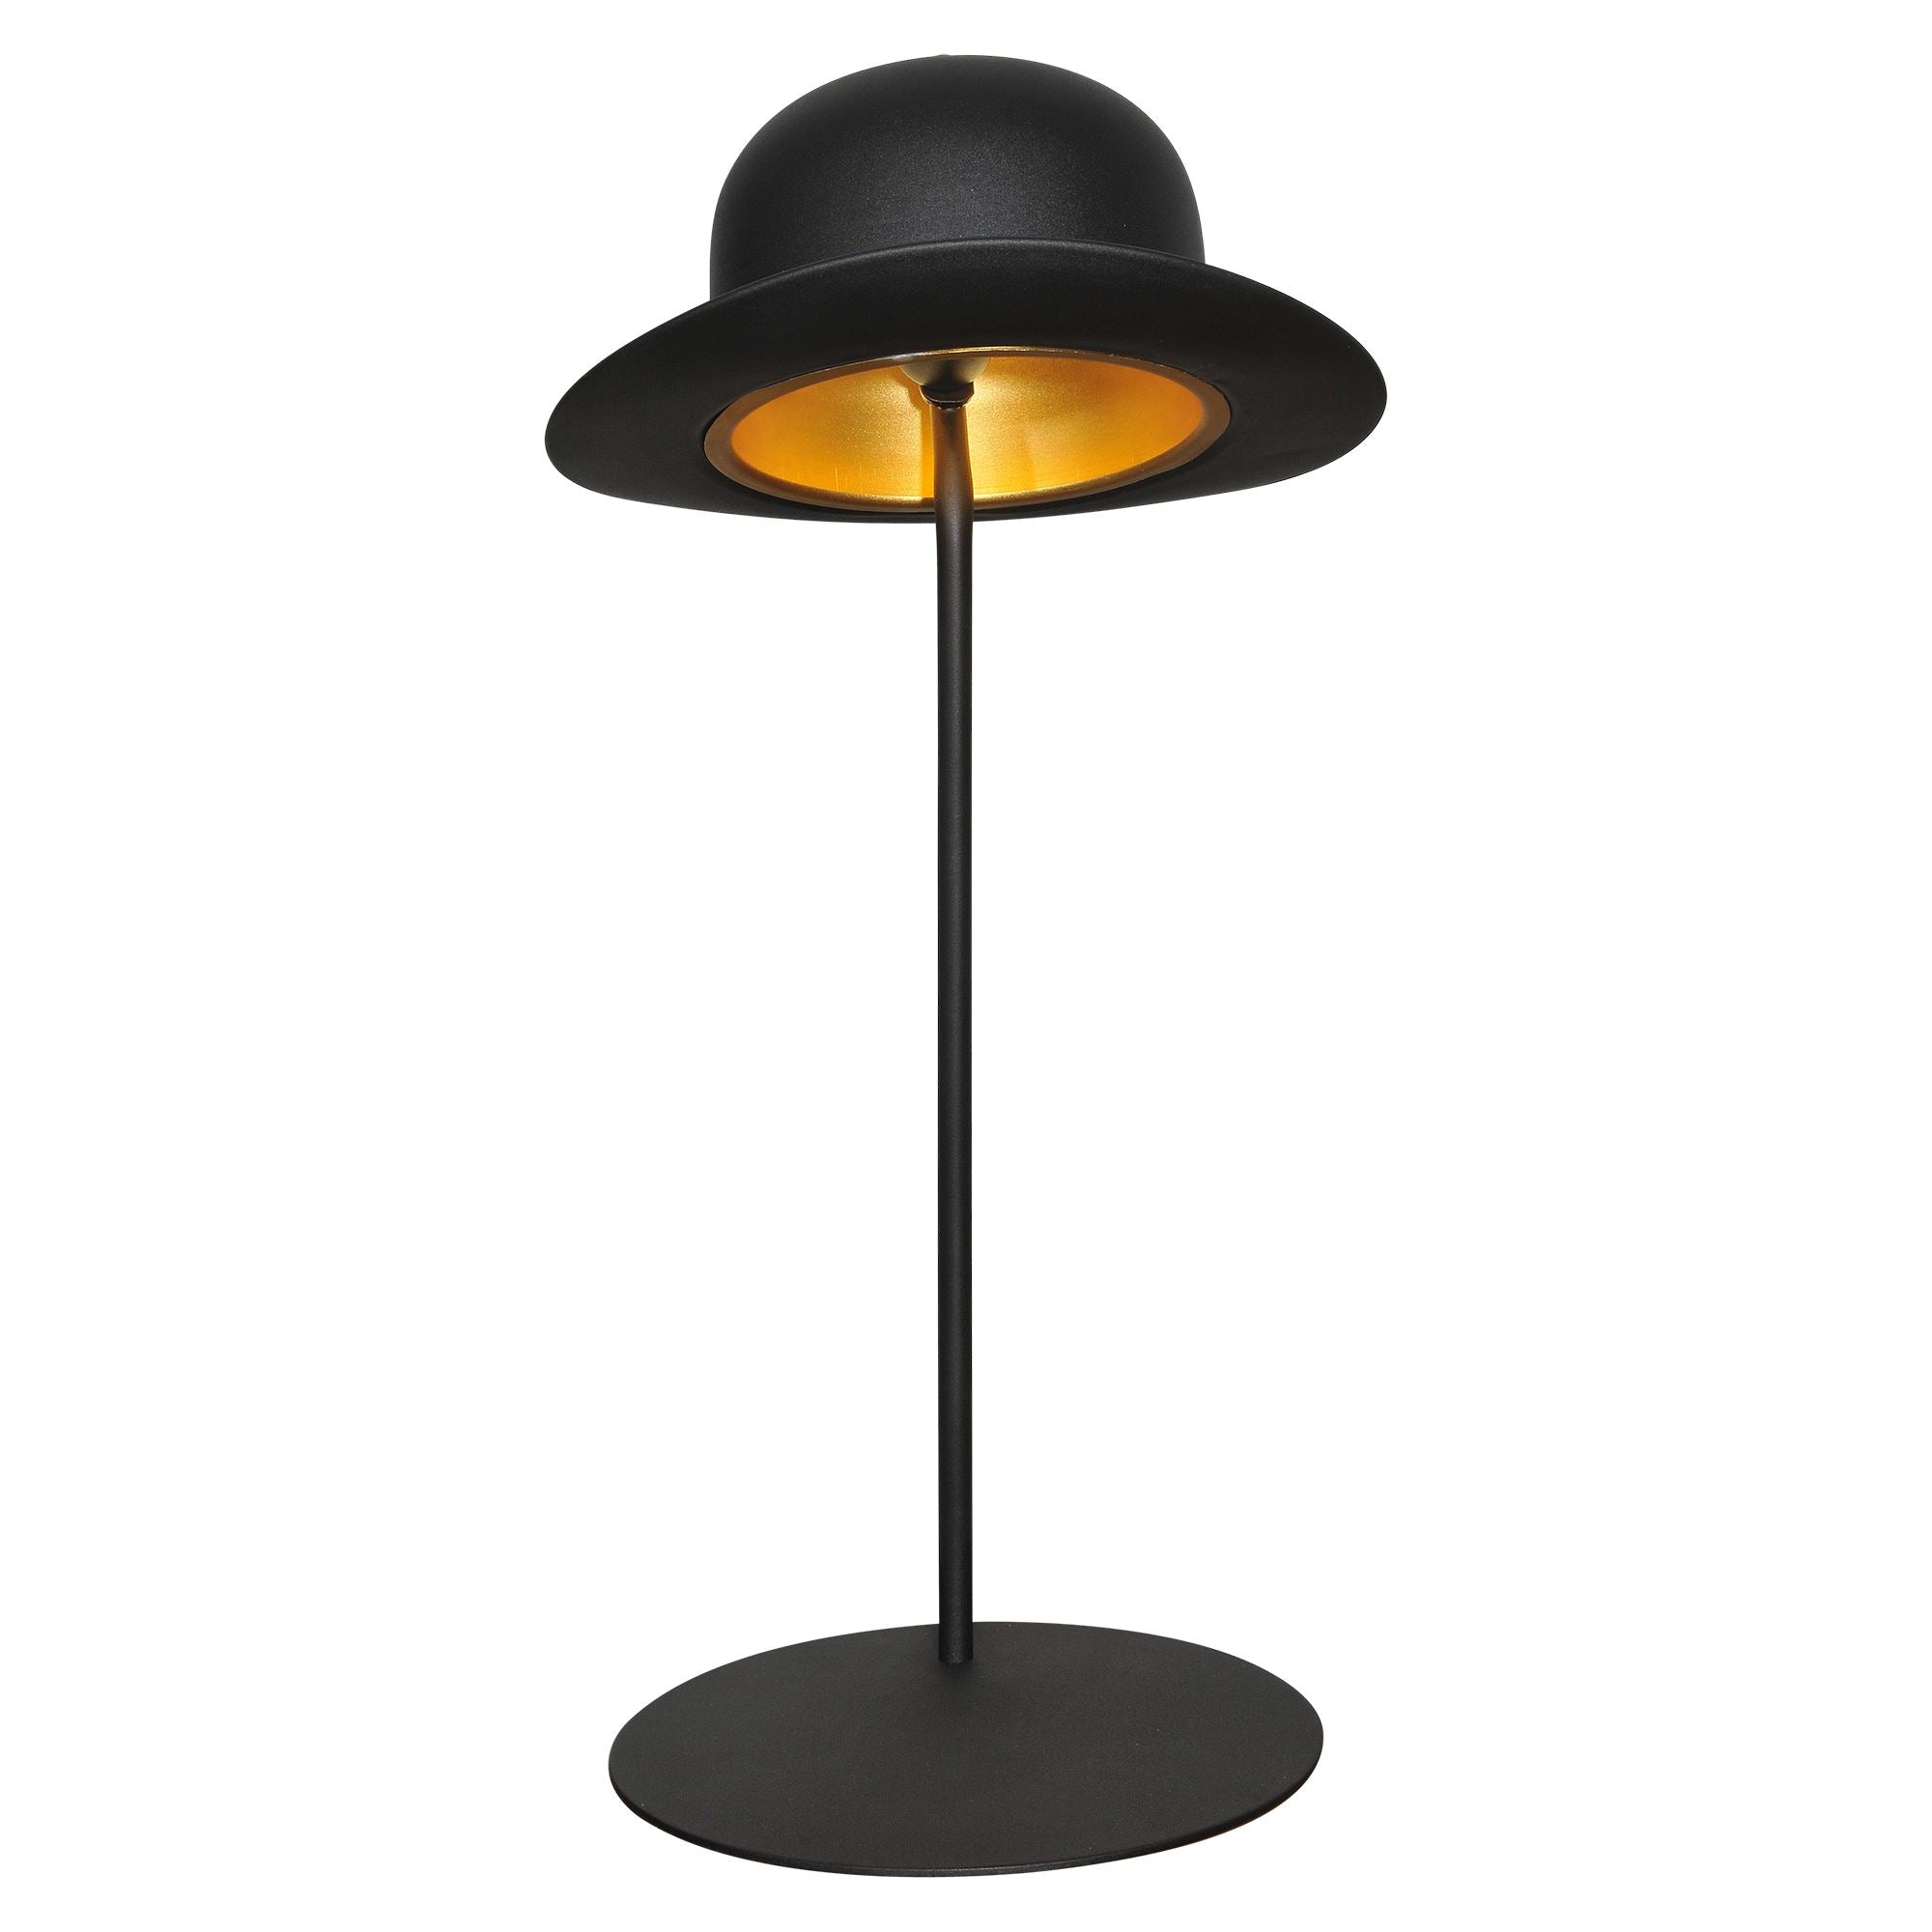 Edbert 24" Iron - Black Powder Table Lamp